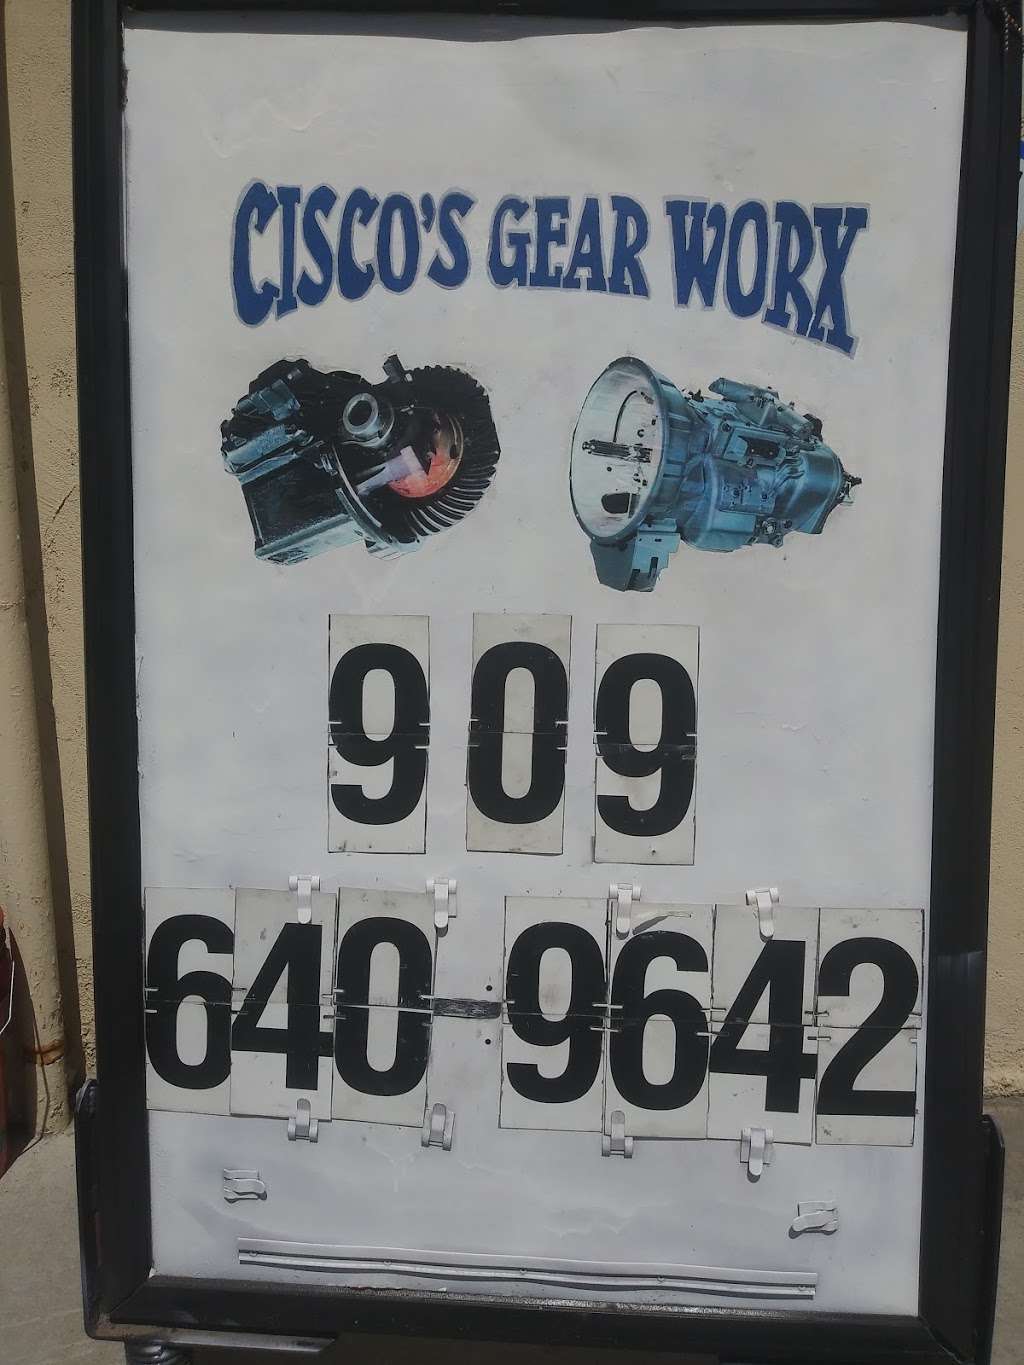 Ciscos Gear Worx | 2266 Lilac Ave, Bloomington, CA 92316 | Phone: (909) 640-9642